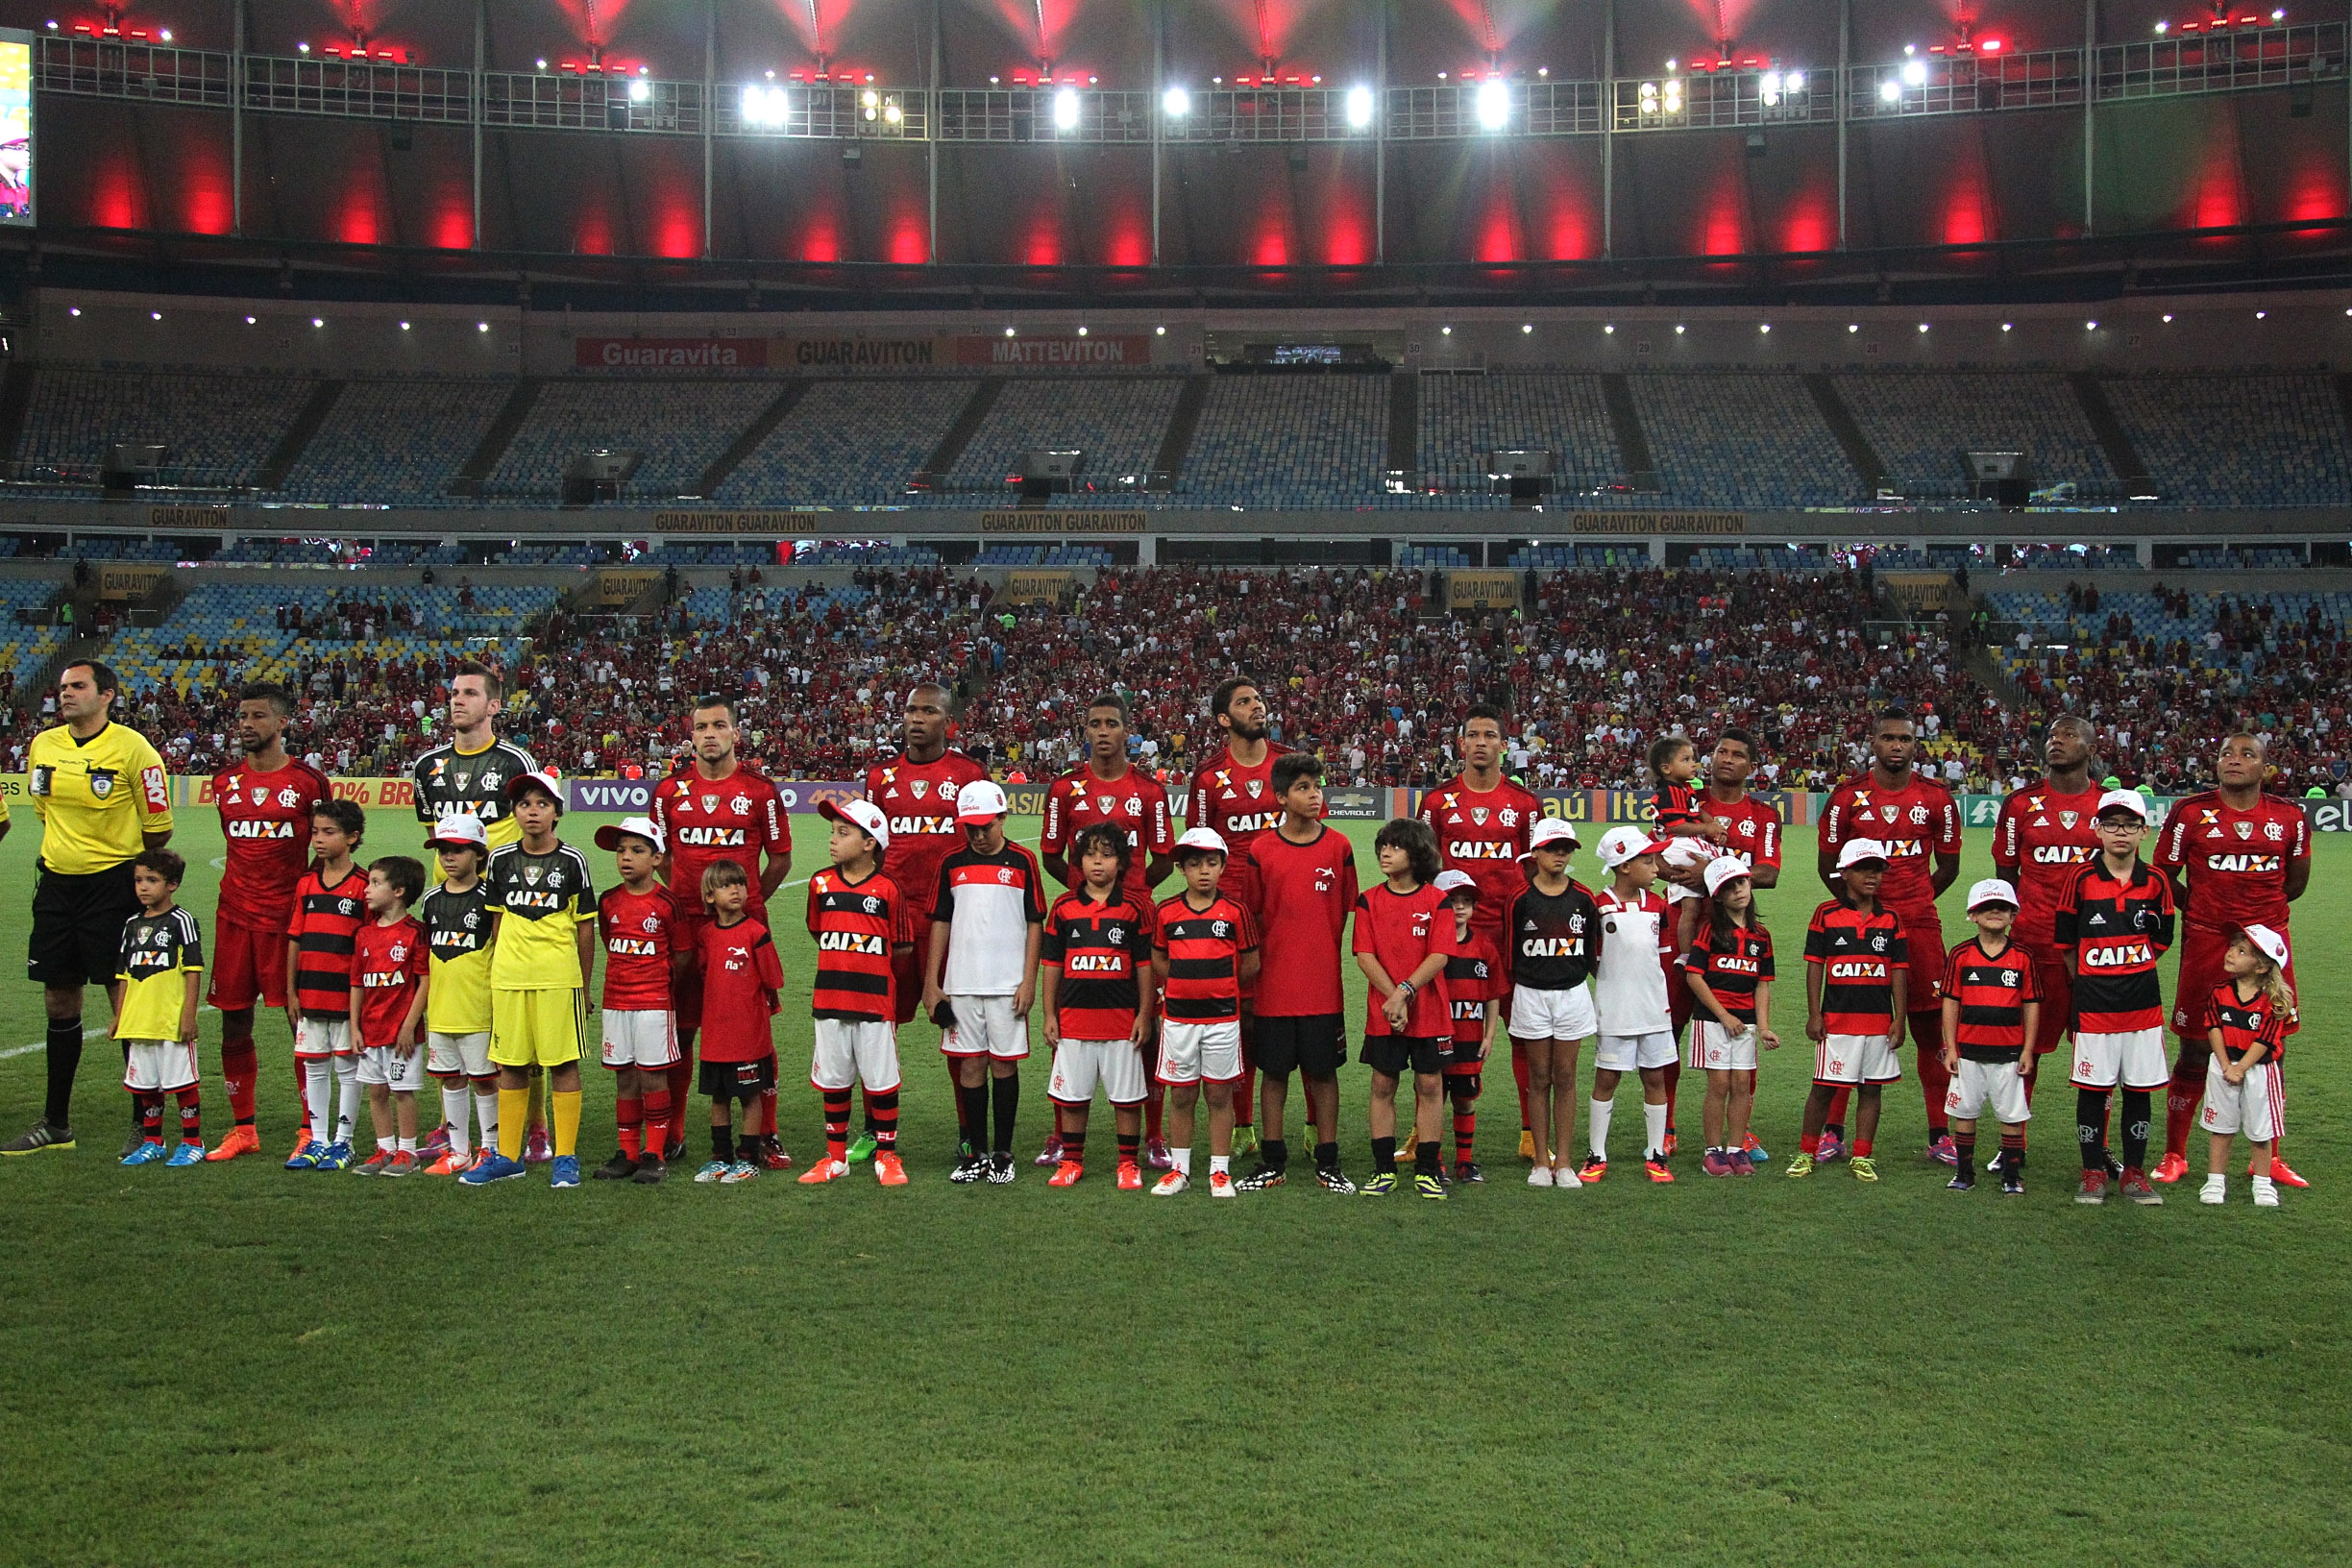 C.R.Flamengo 3 x 0 Chapecoense (SC) - 02-11-2014 - Campeonato Brasileiro